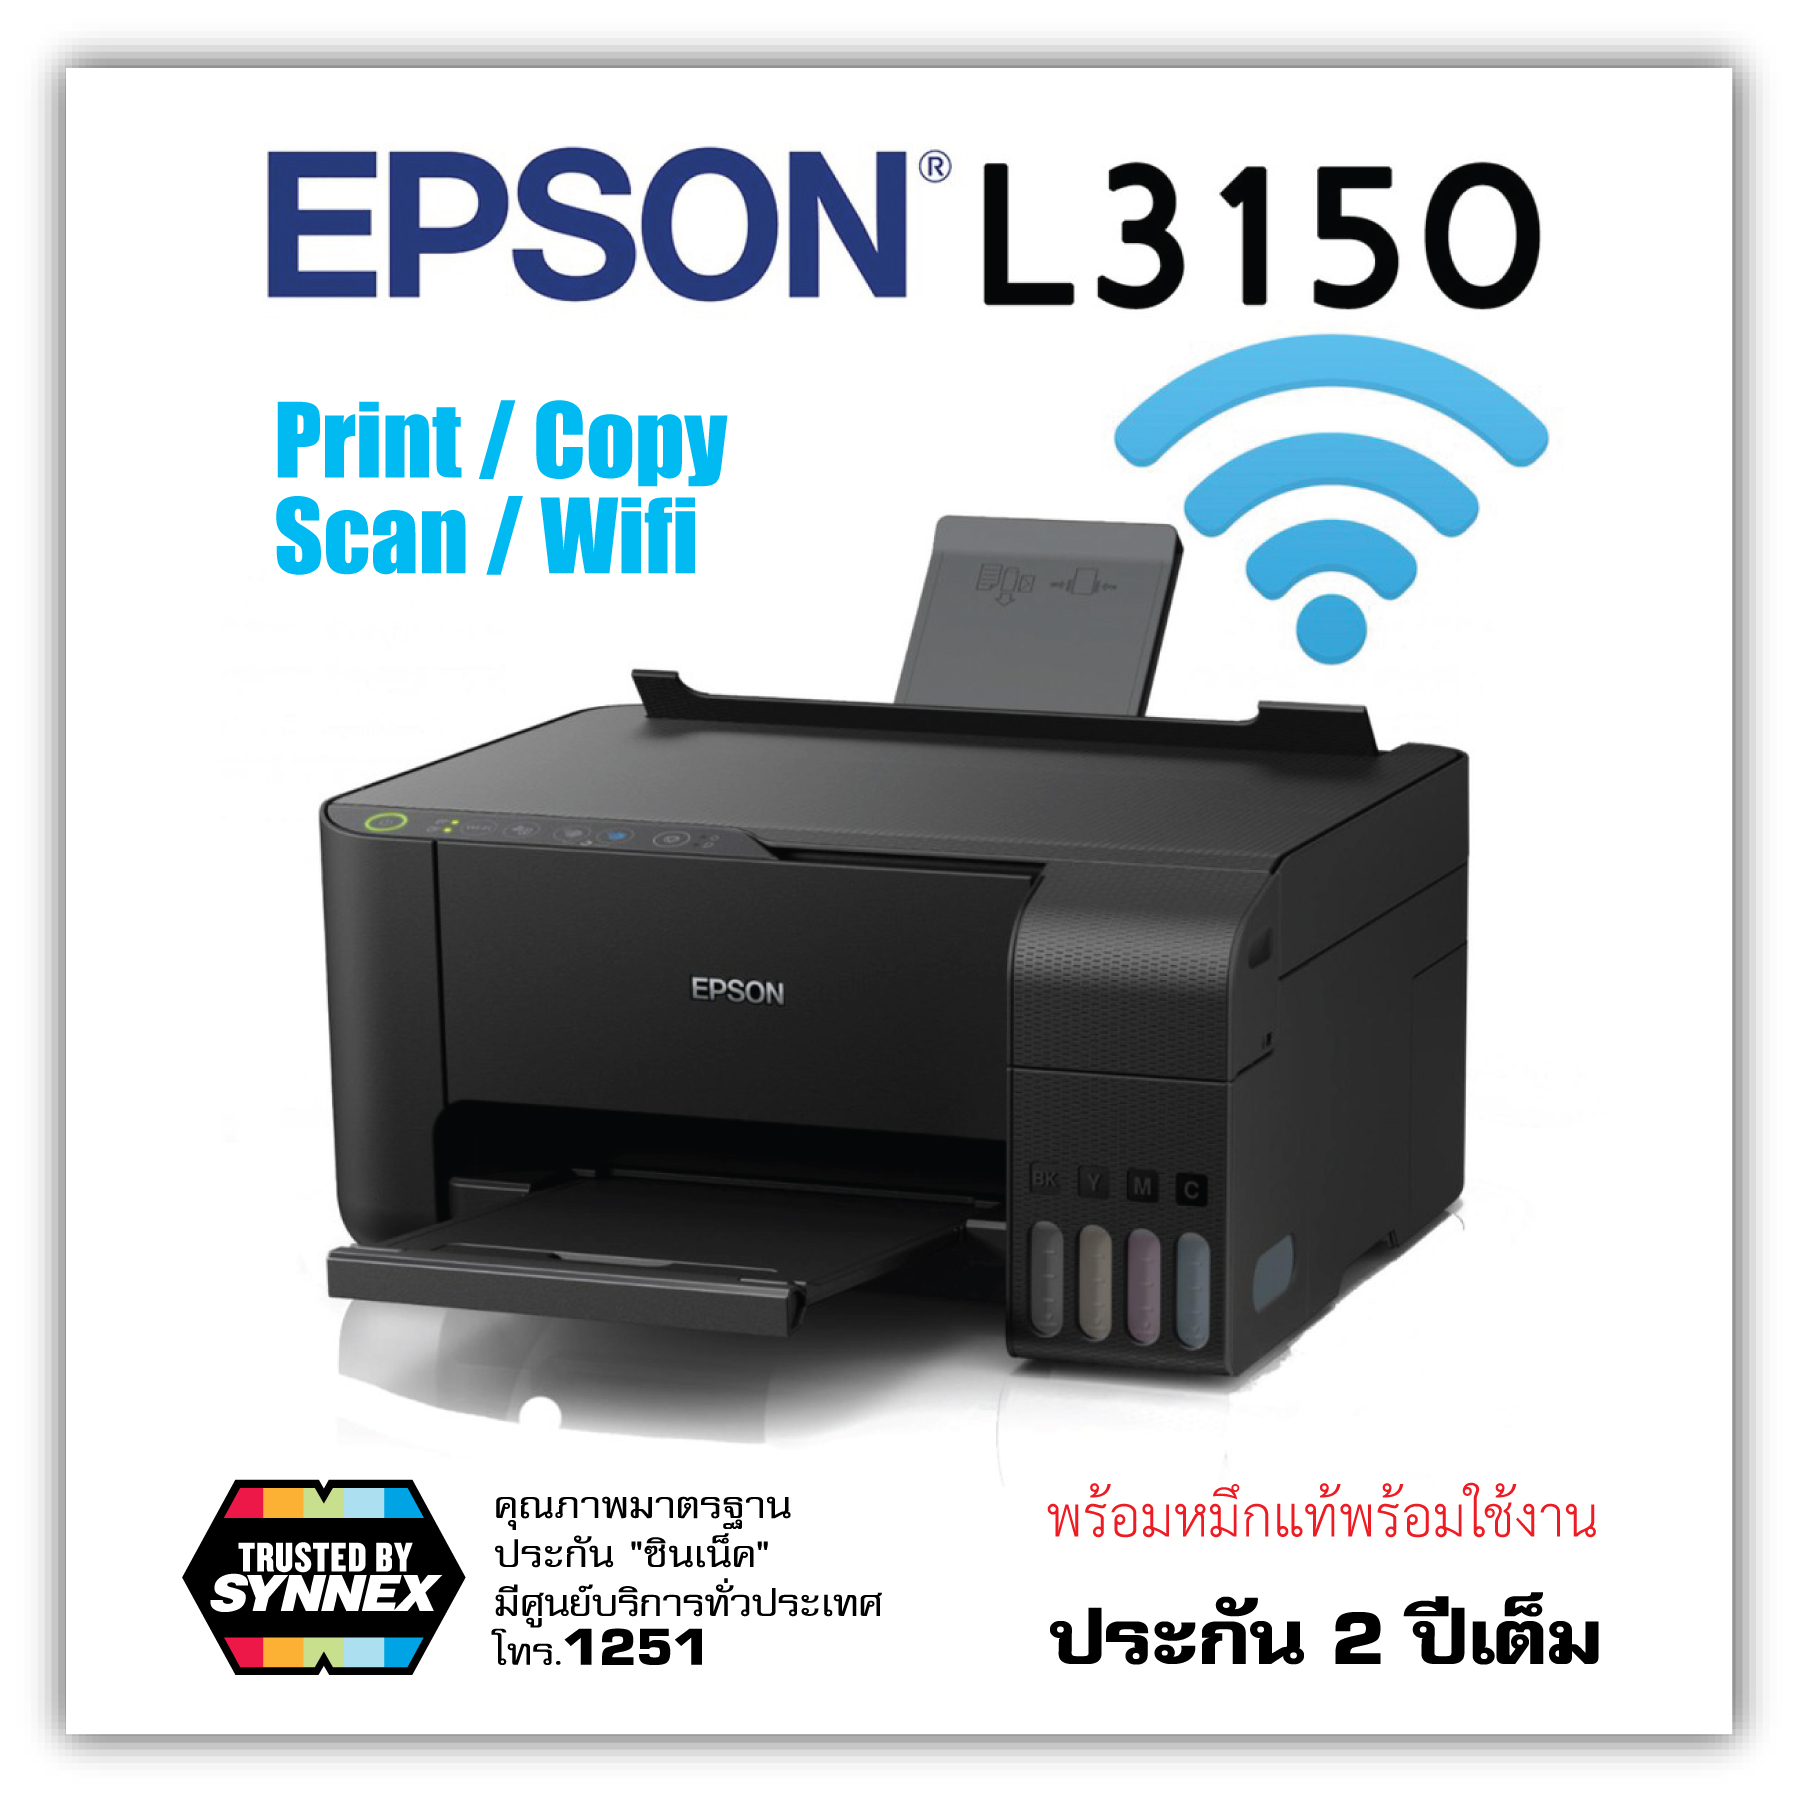 EPSON L3150 All-in-One Ink Tank Printer Wi-fi ของแท้100% ประกันซินเน็ค แถมฟรีหมึกแท้1ชุด ส่งฟรีทั่วประเทศ [ต้องการใบกำกับภาษีกรุณาทักแชท]